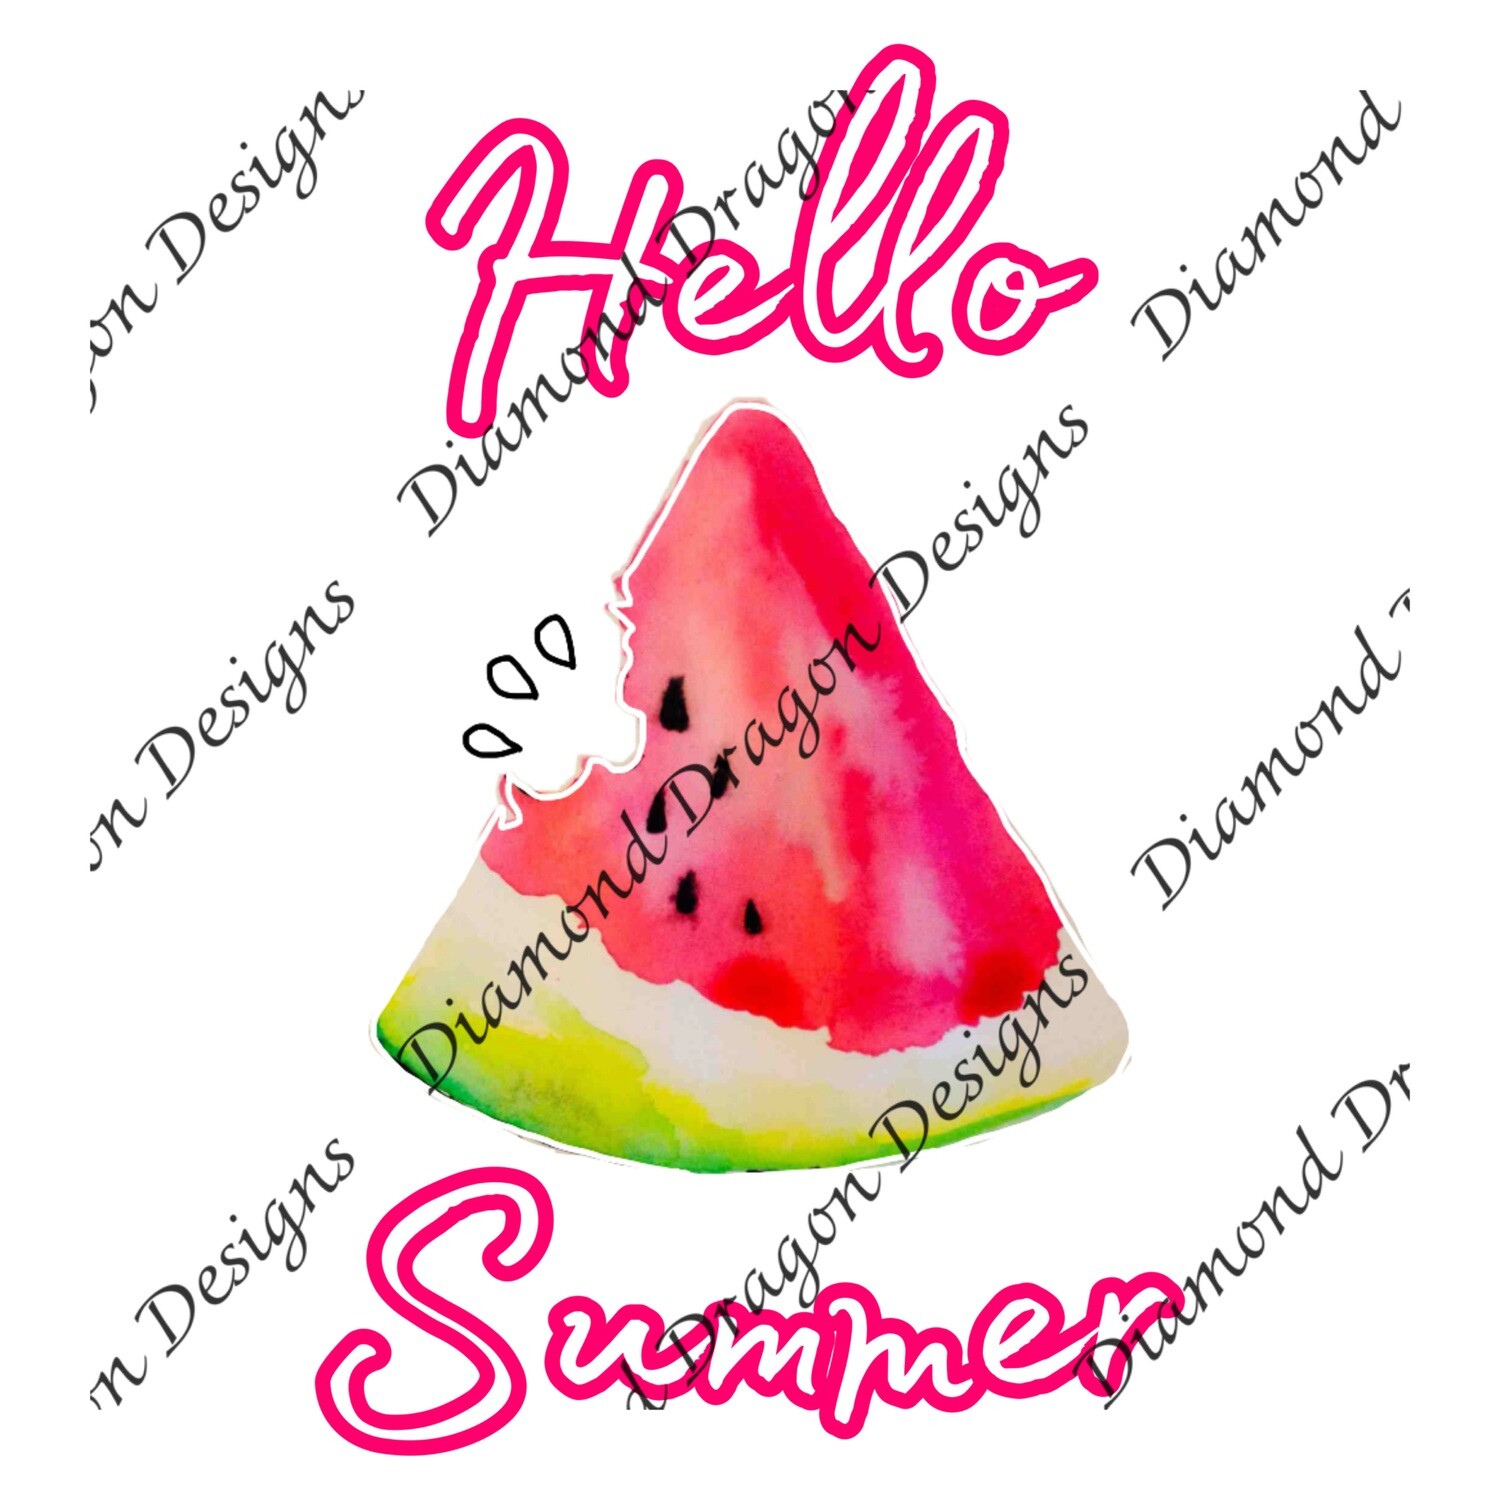 Watermelon - Summer, Hello Summer, Watermelon Slice, Watercolor, Digital Image